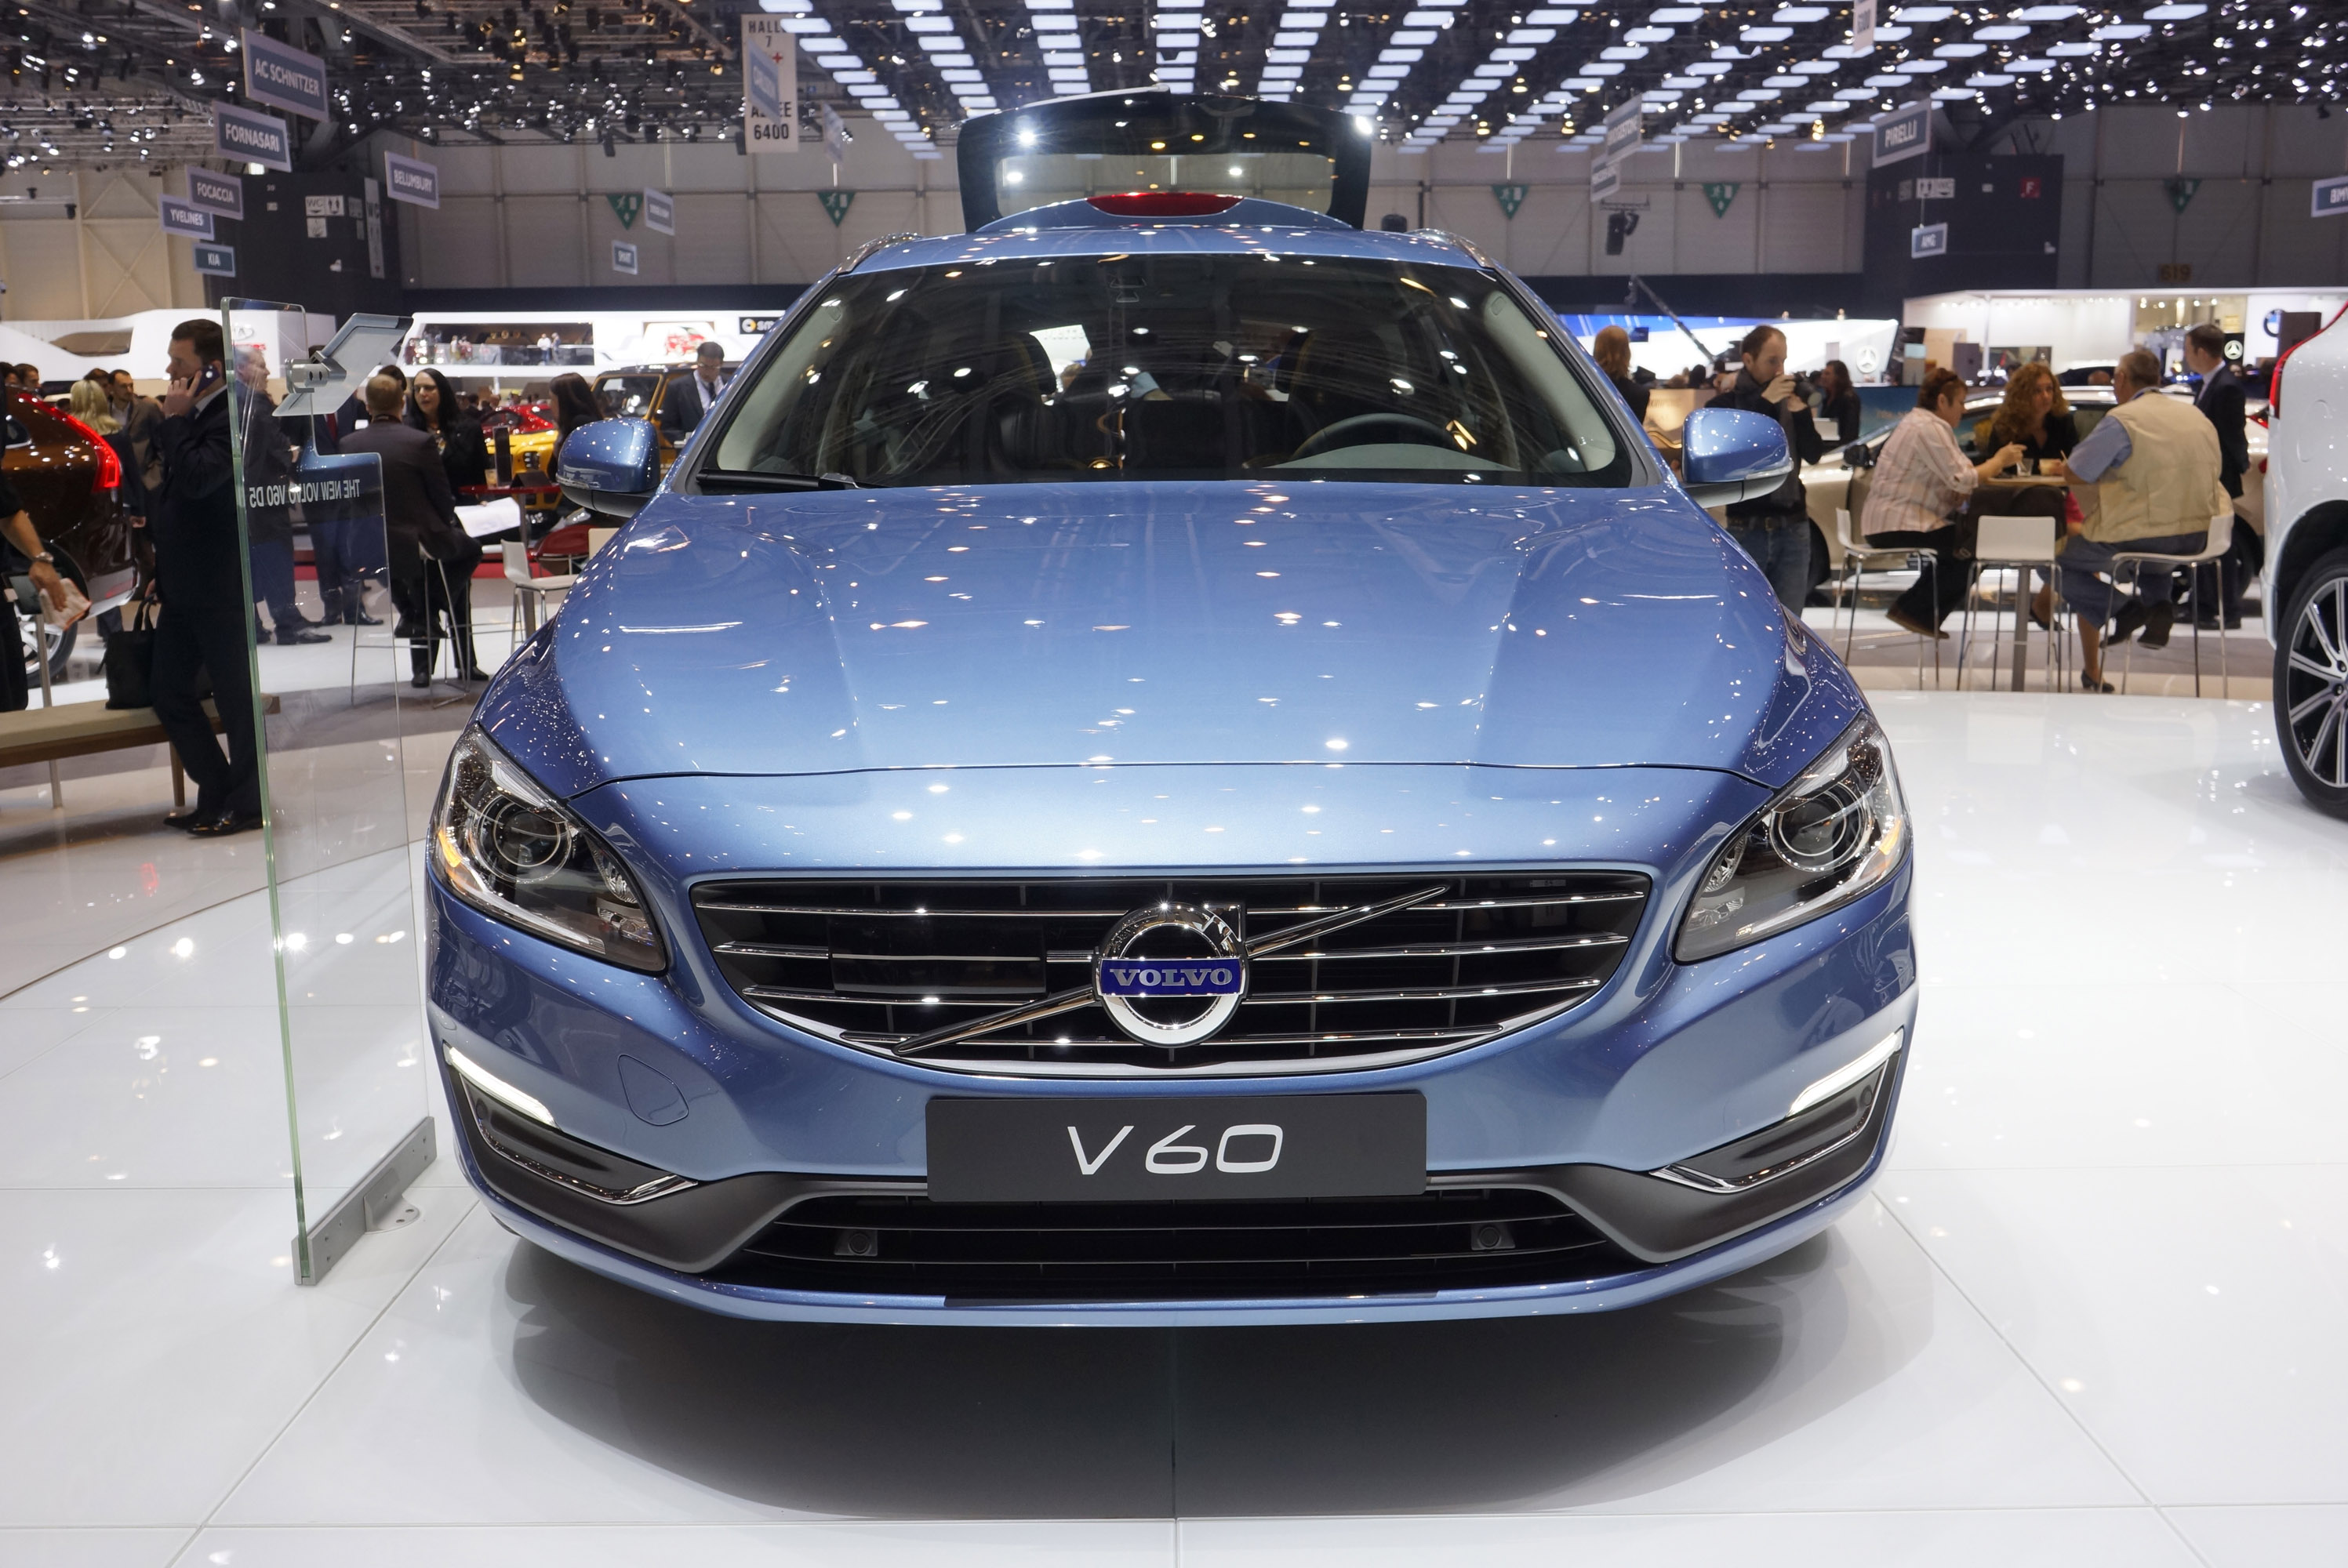 Volvo V60 Geneva